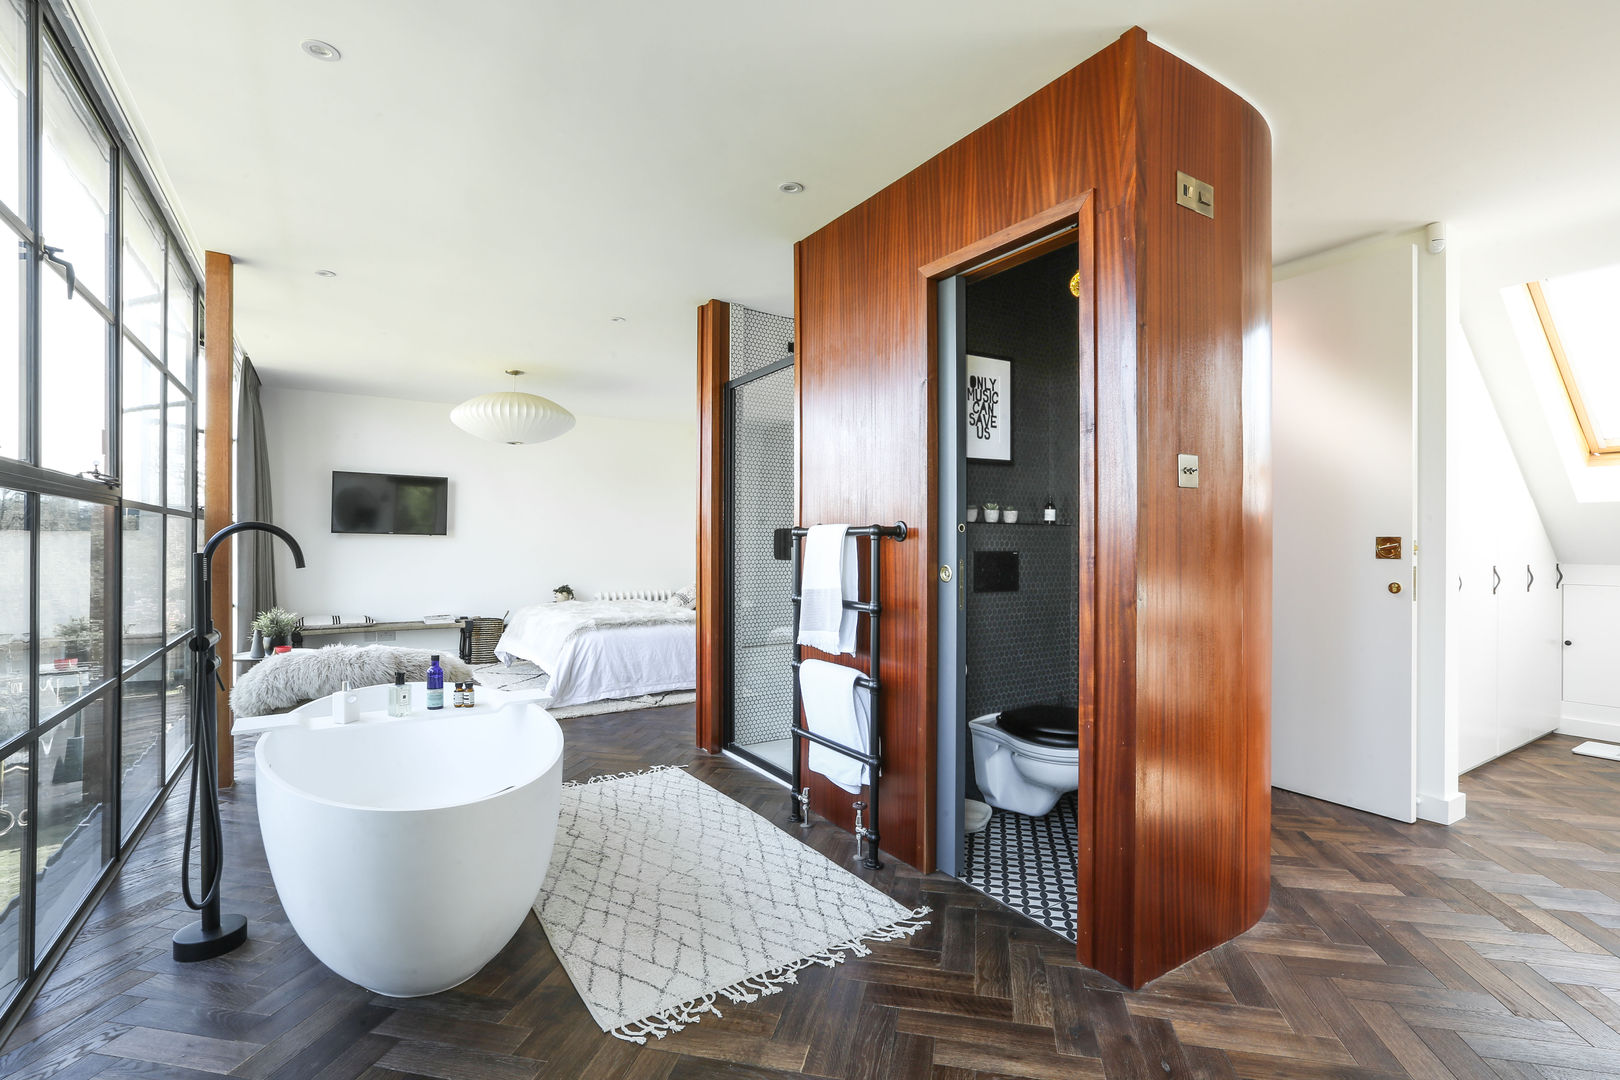 Greenacre Martins Camisuli Architects & Designers Eclectic style bathroom extension,attic,openplan,bedroom,bathroom